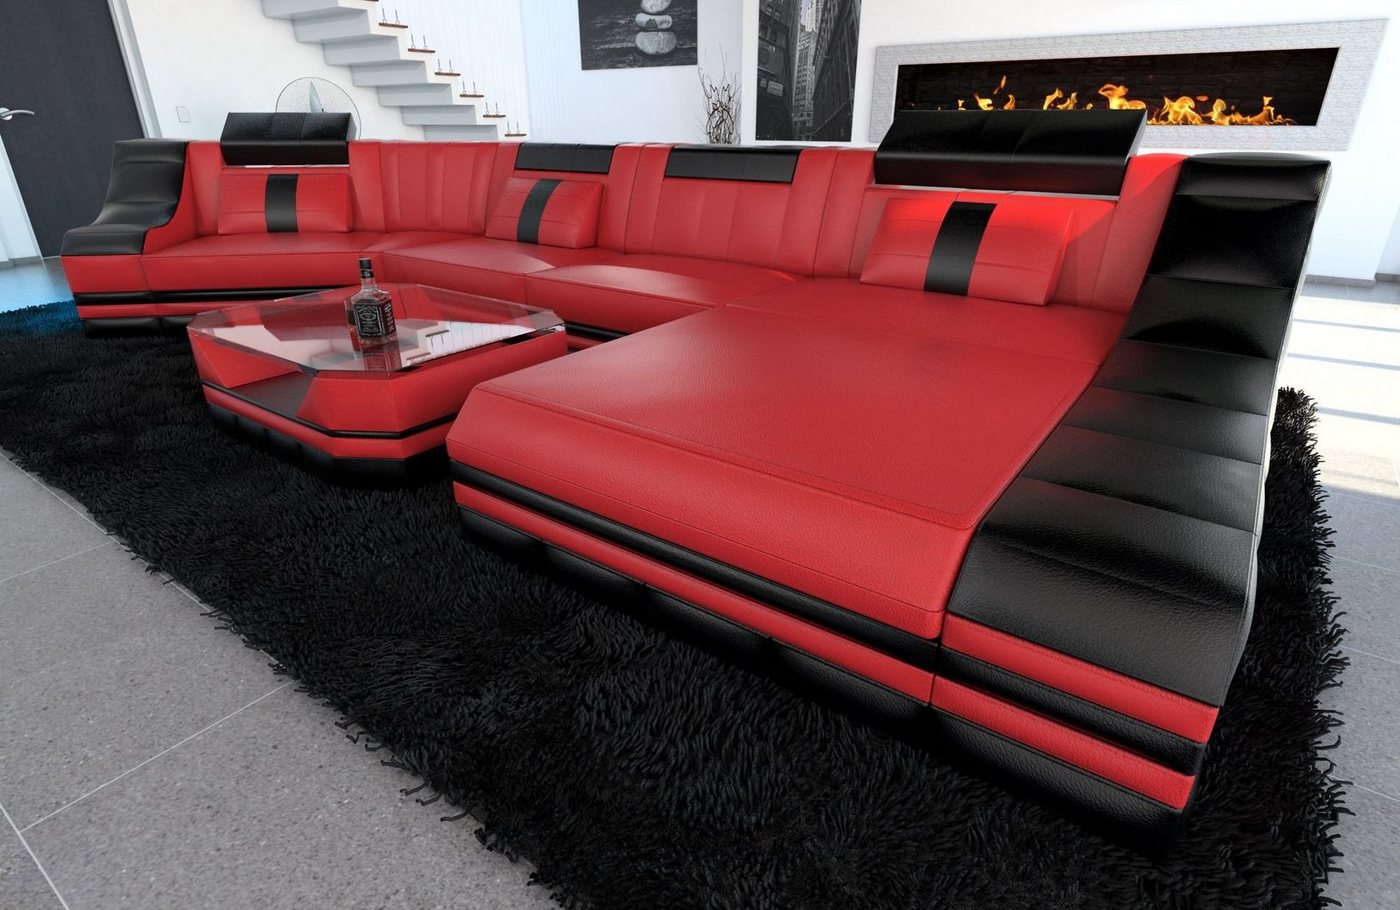 Sofa Dreams Wohnlandschaft Ledercouch Turino C Form Ledersofa Leder Sofa, Couch, mit LED, wahlweise mit Bettfunktion als Schlafsofa, Designersofa von Sofa Dreams